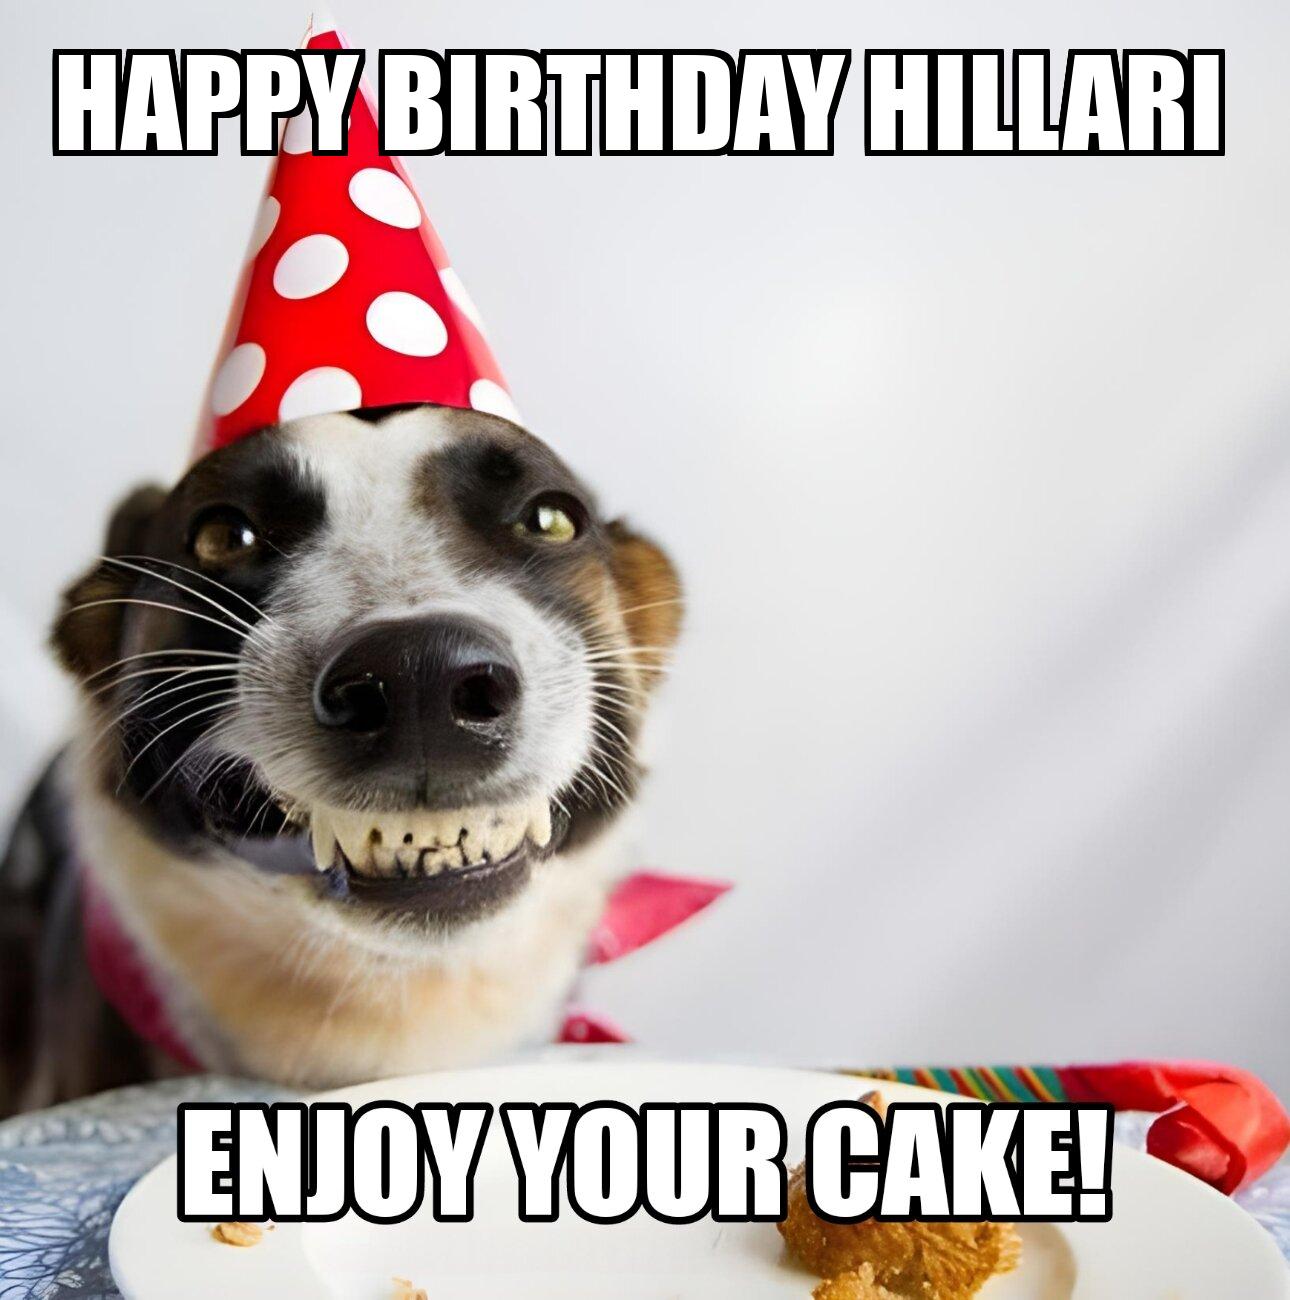 Happy Birthday Hillari Enjoy Your Cake Dog Meme